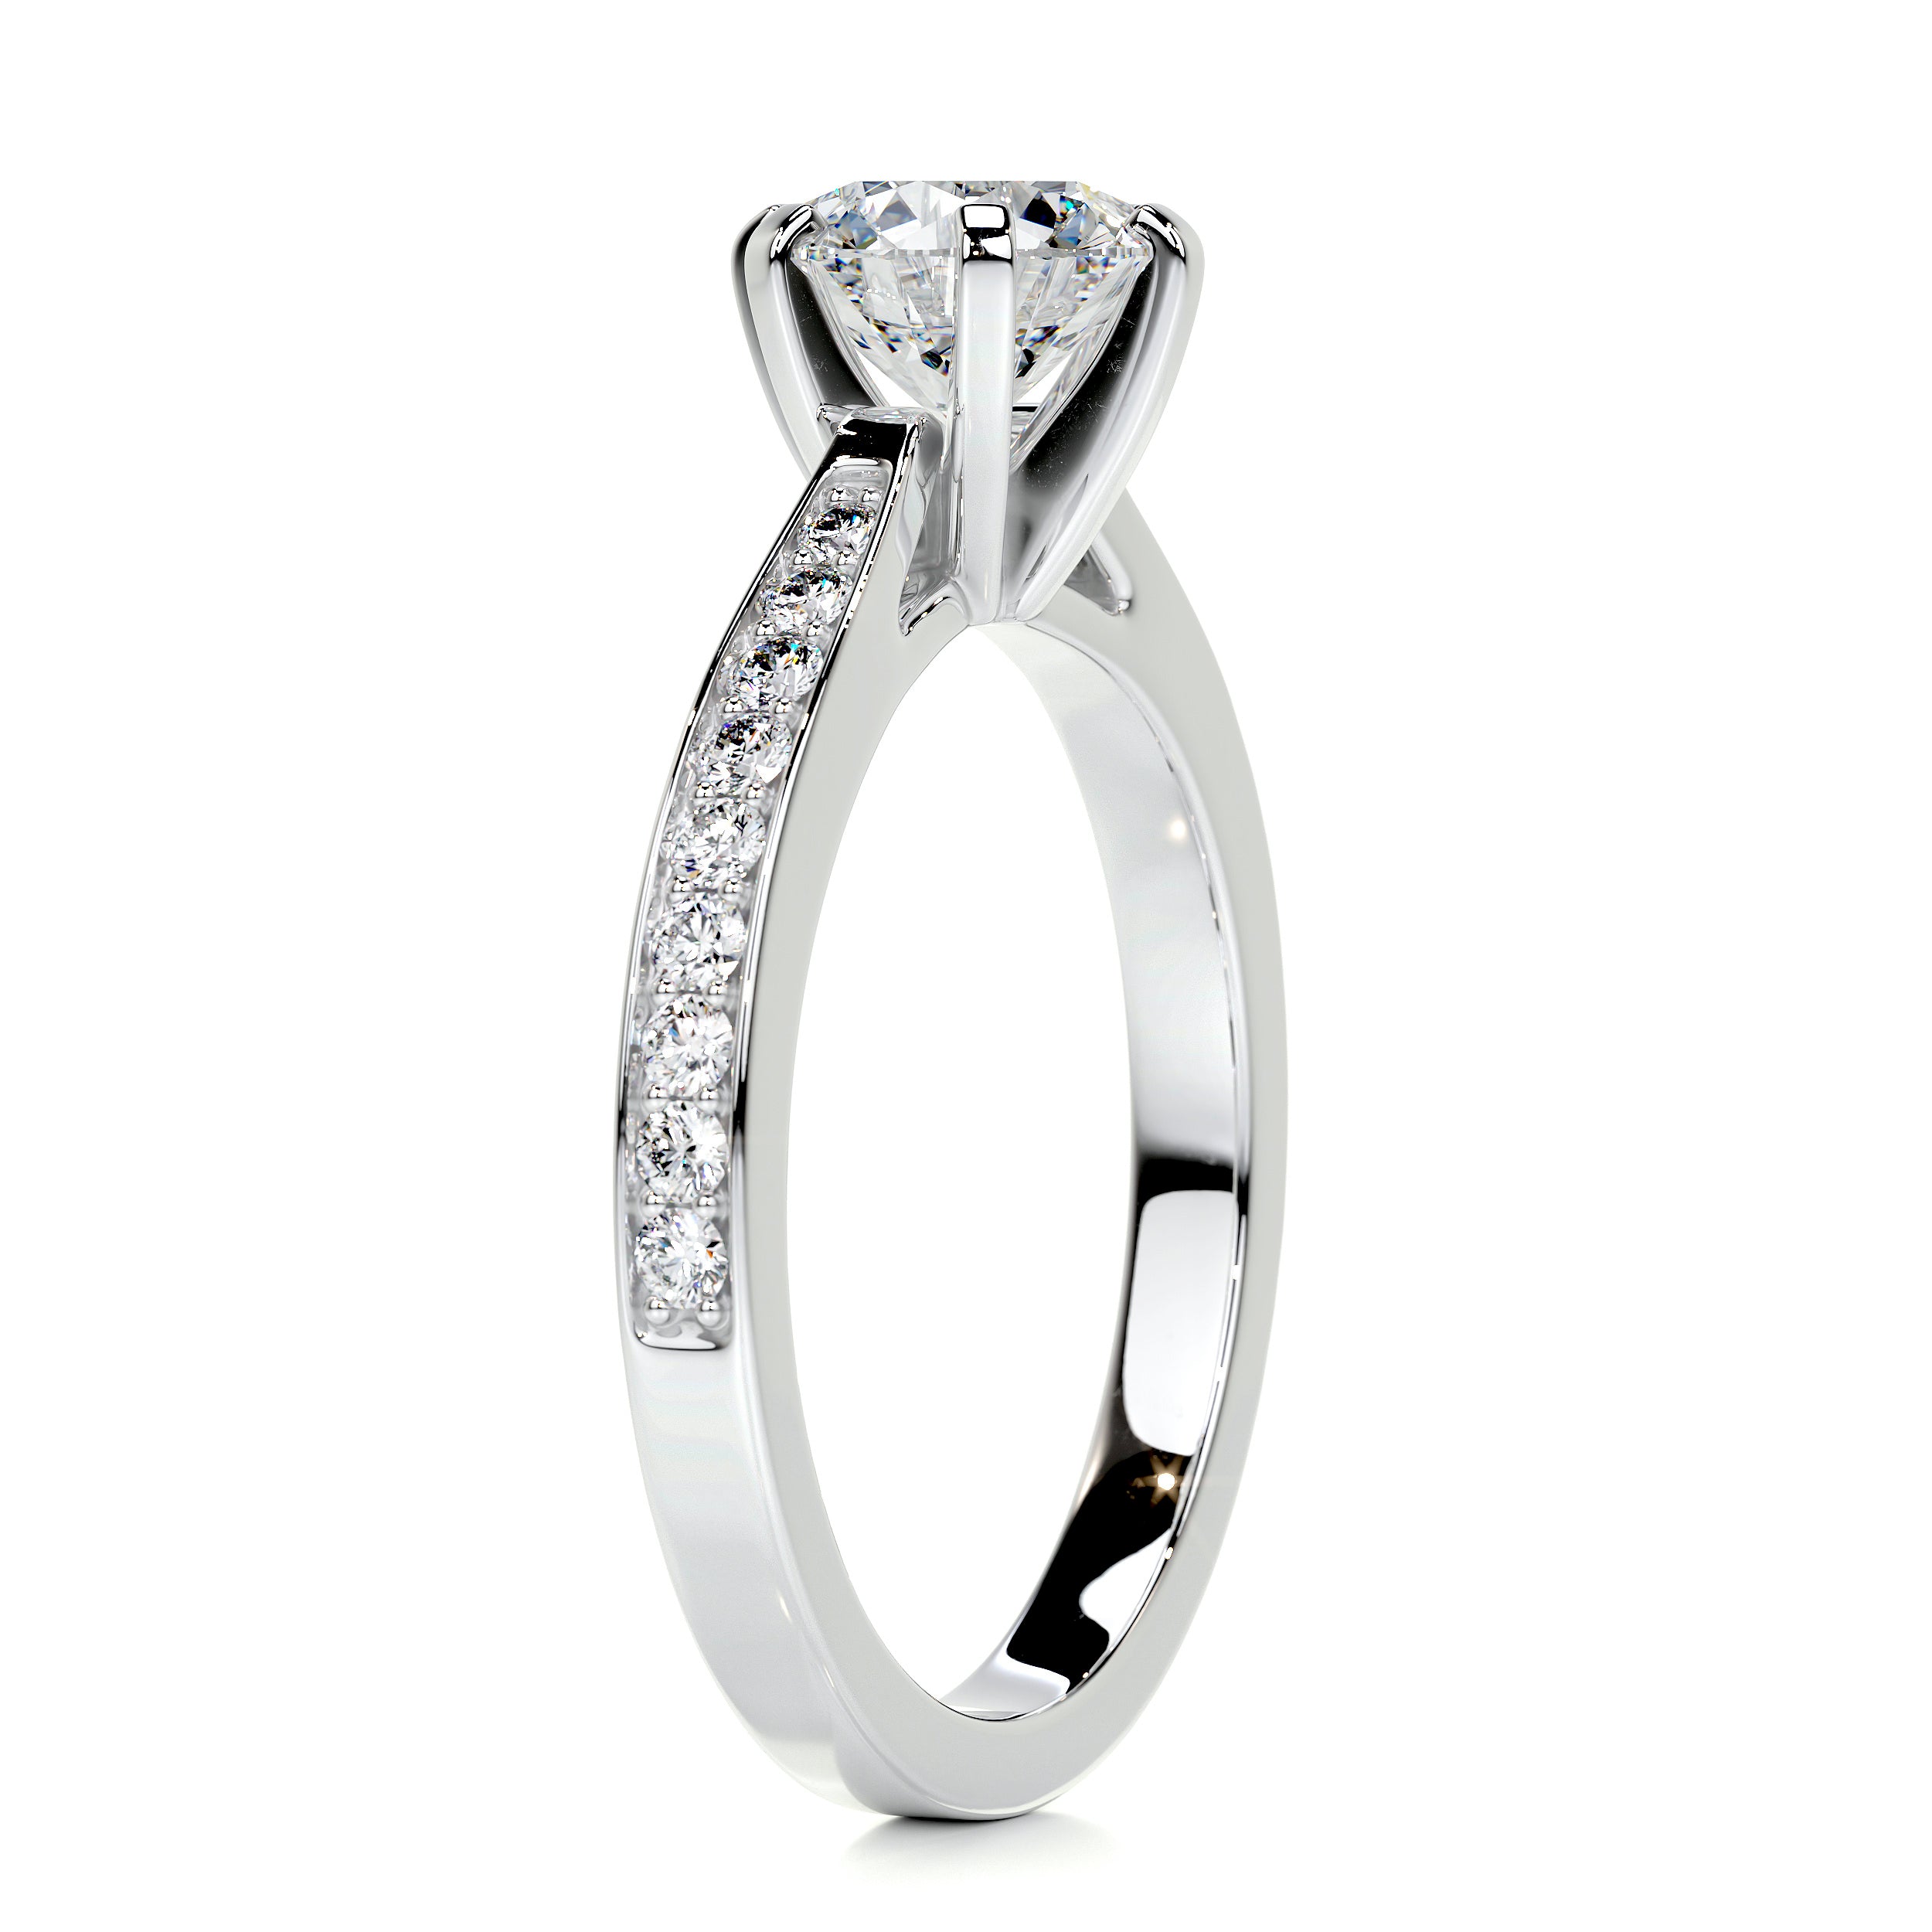 Talia Diamond Engagement Ring   (1.2 Carat) - 14K White Gold